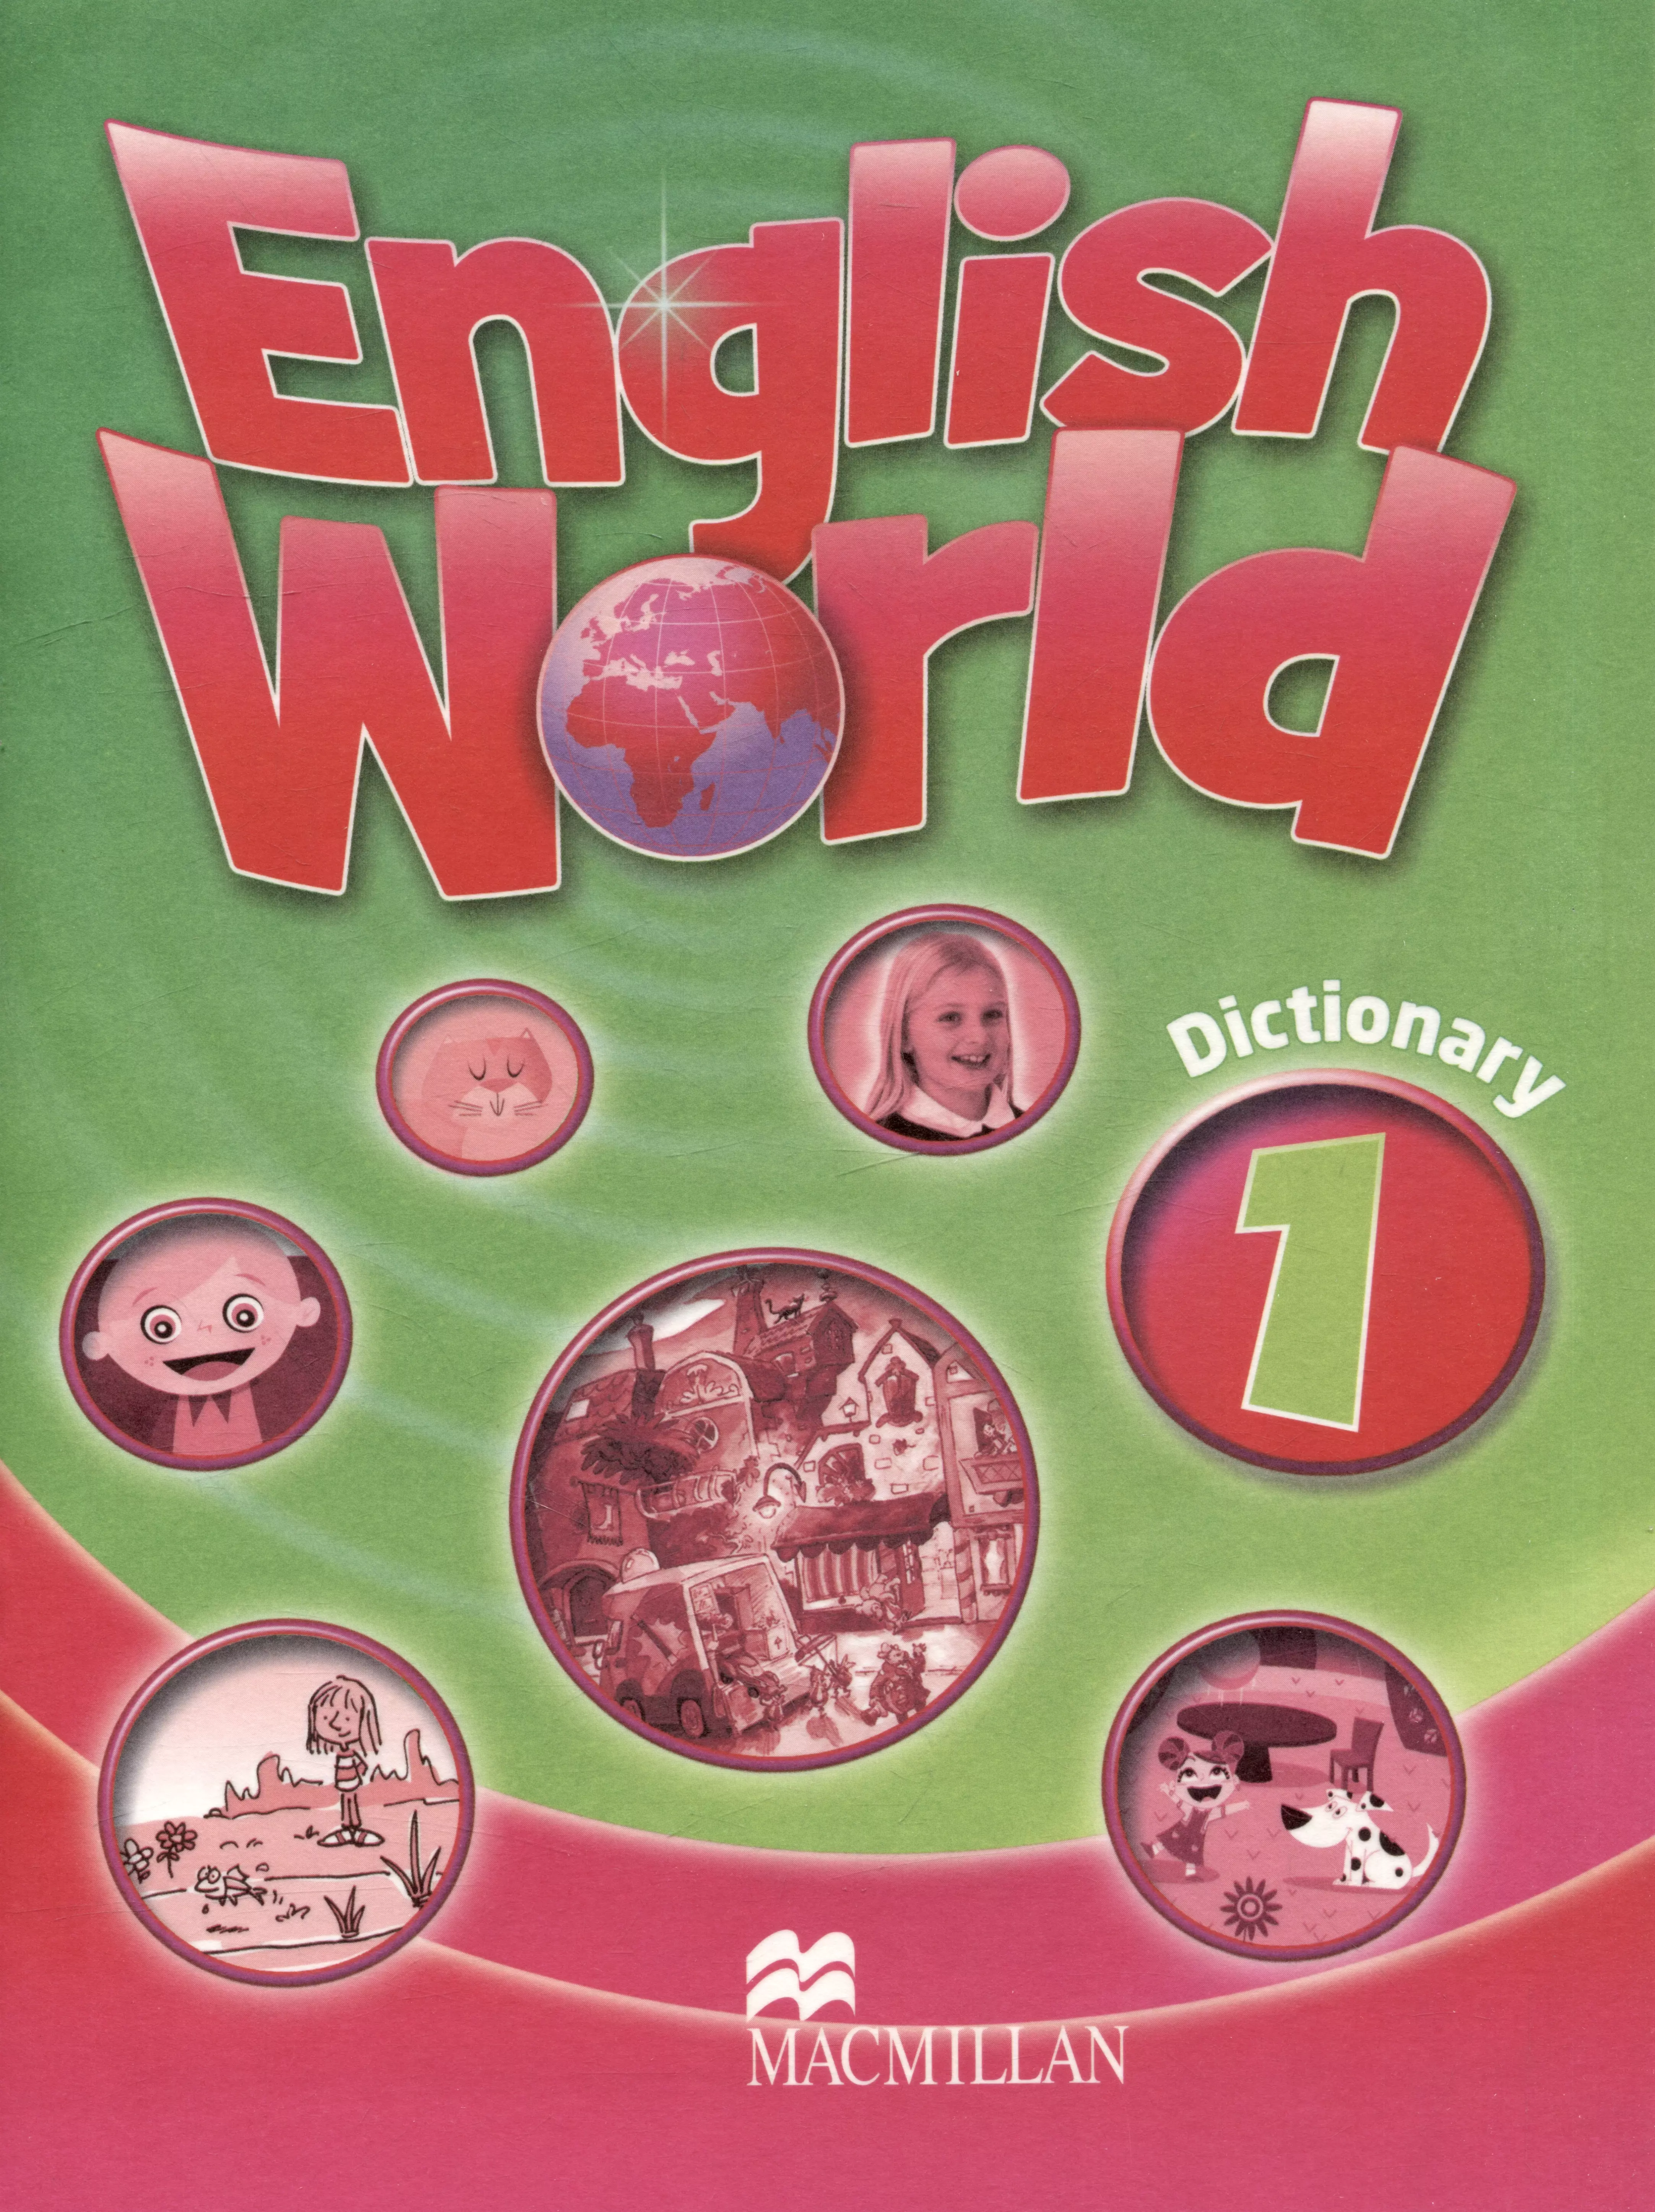 Hocking Liz, Bowen Mary - English World 1: Dictionary